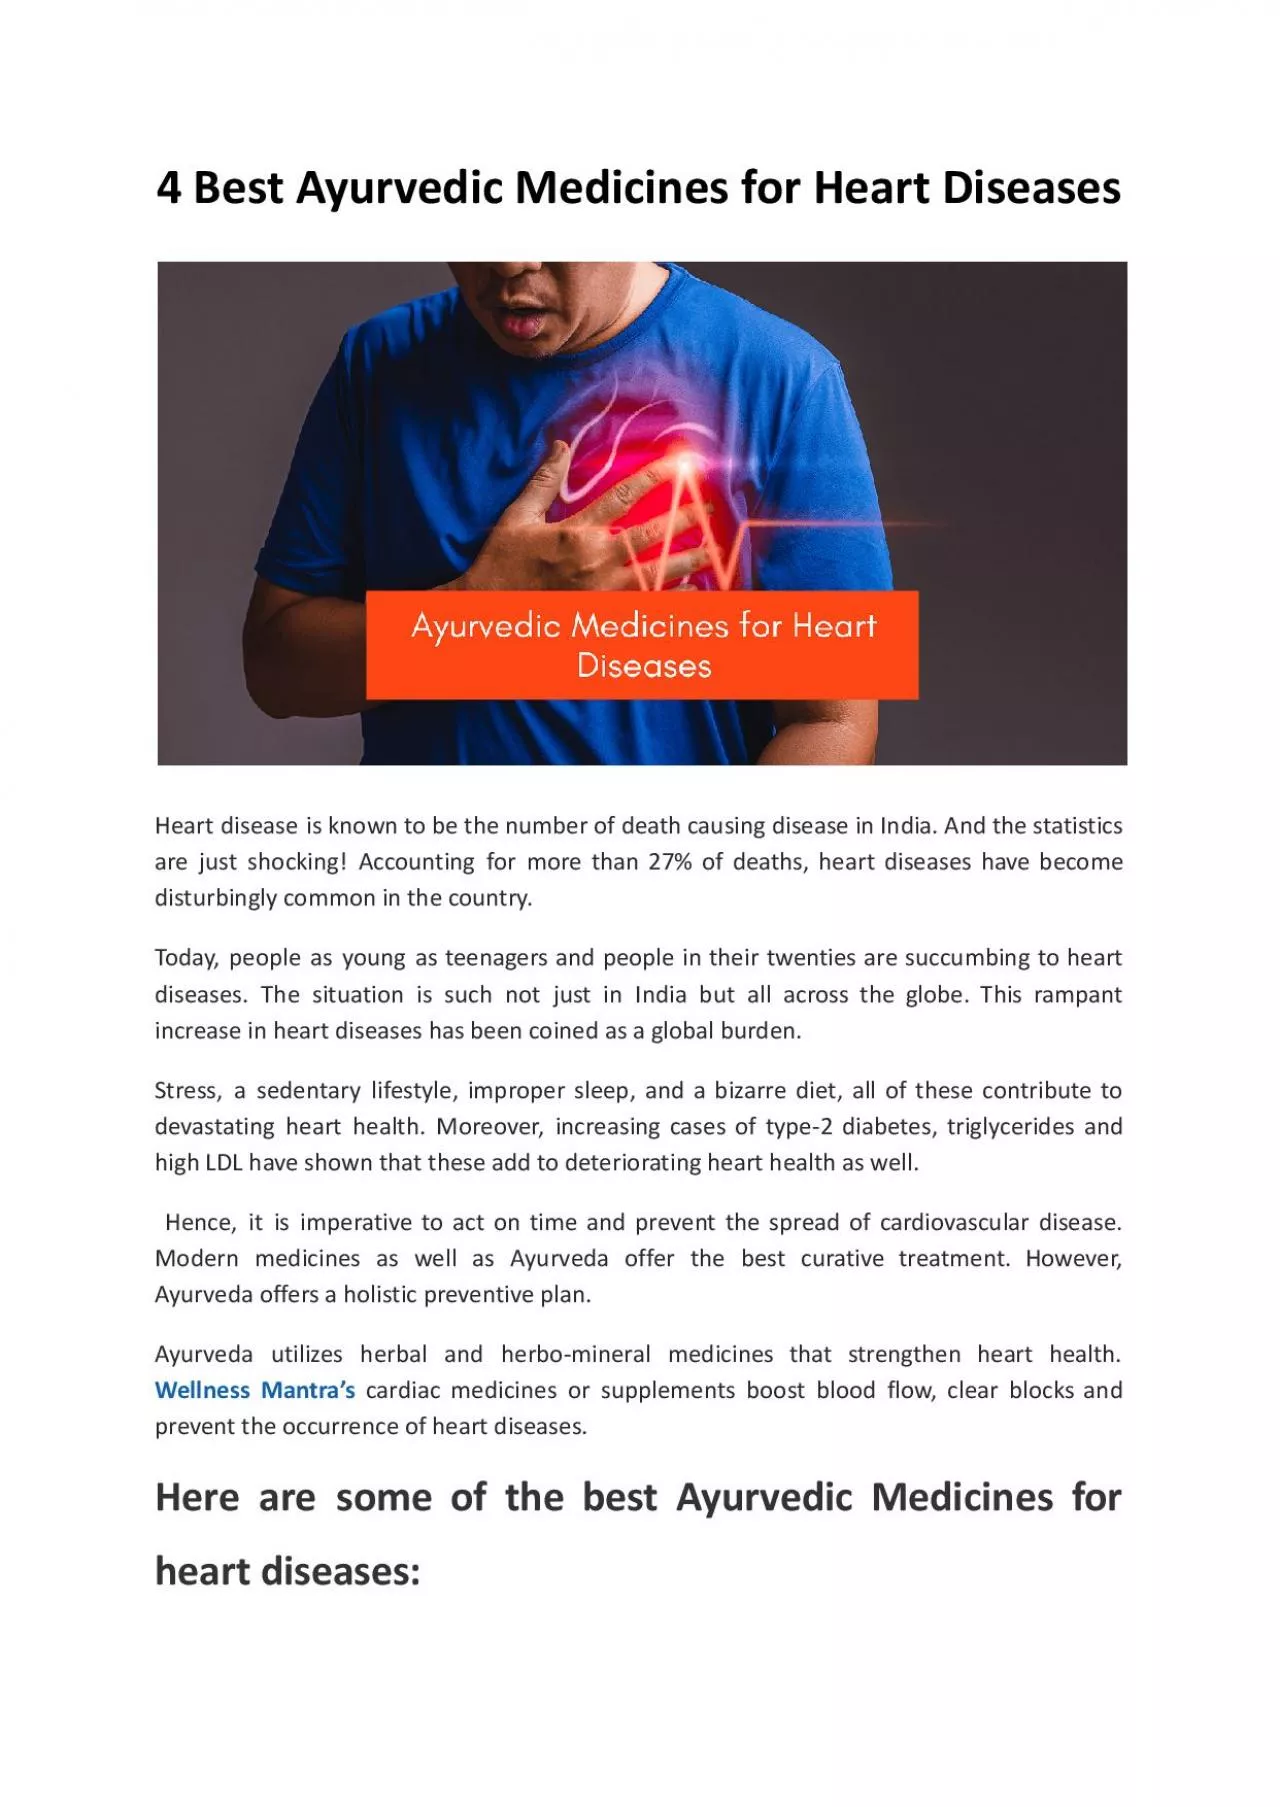 4 Best Ayurvedic Medicines for Heart Diseases - Wellness Mantra